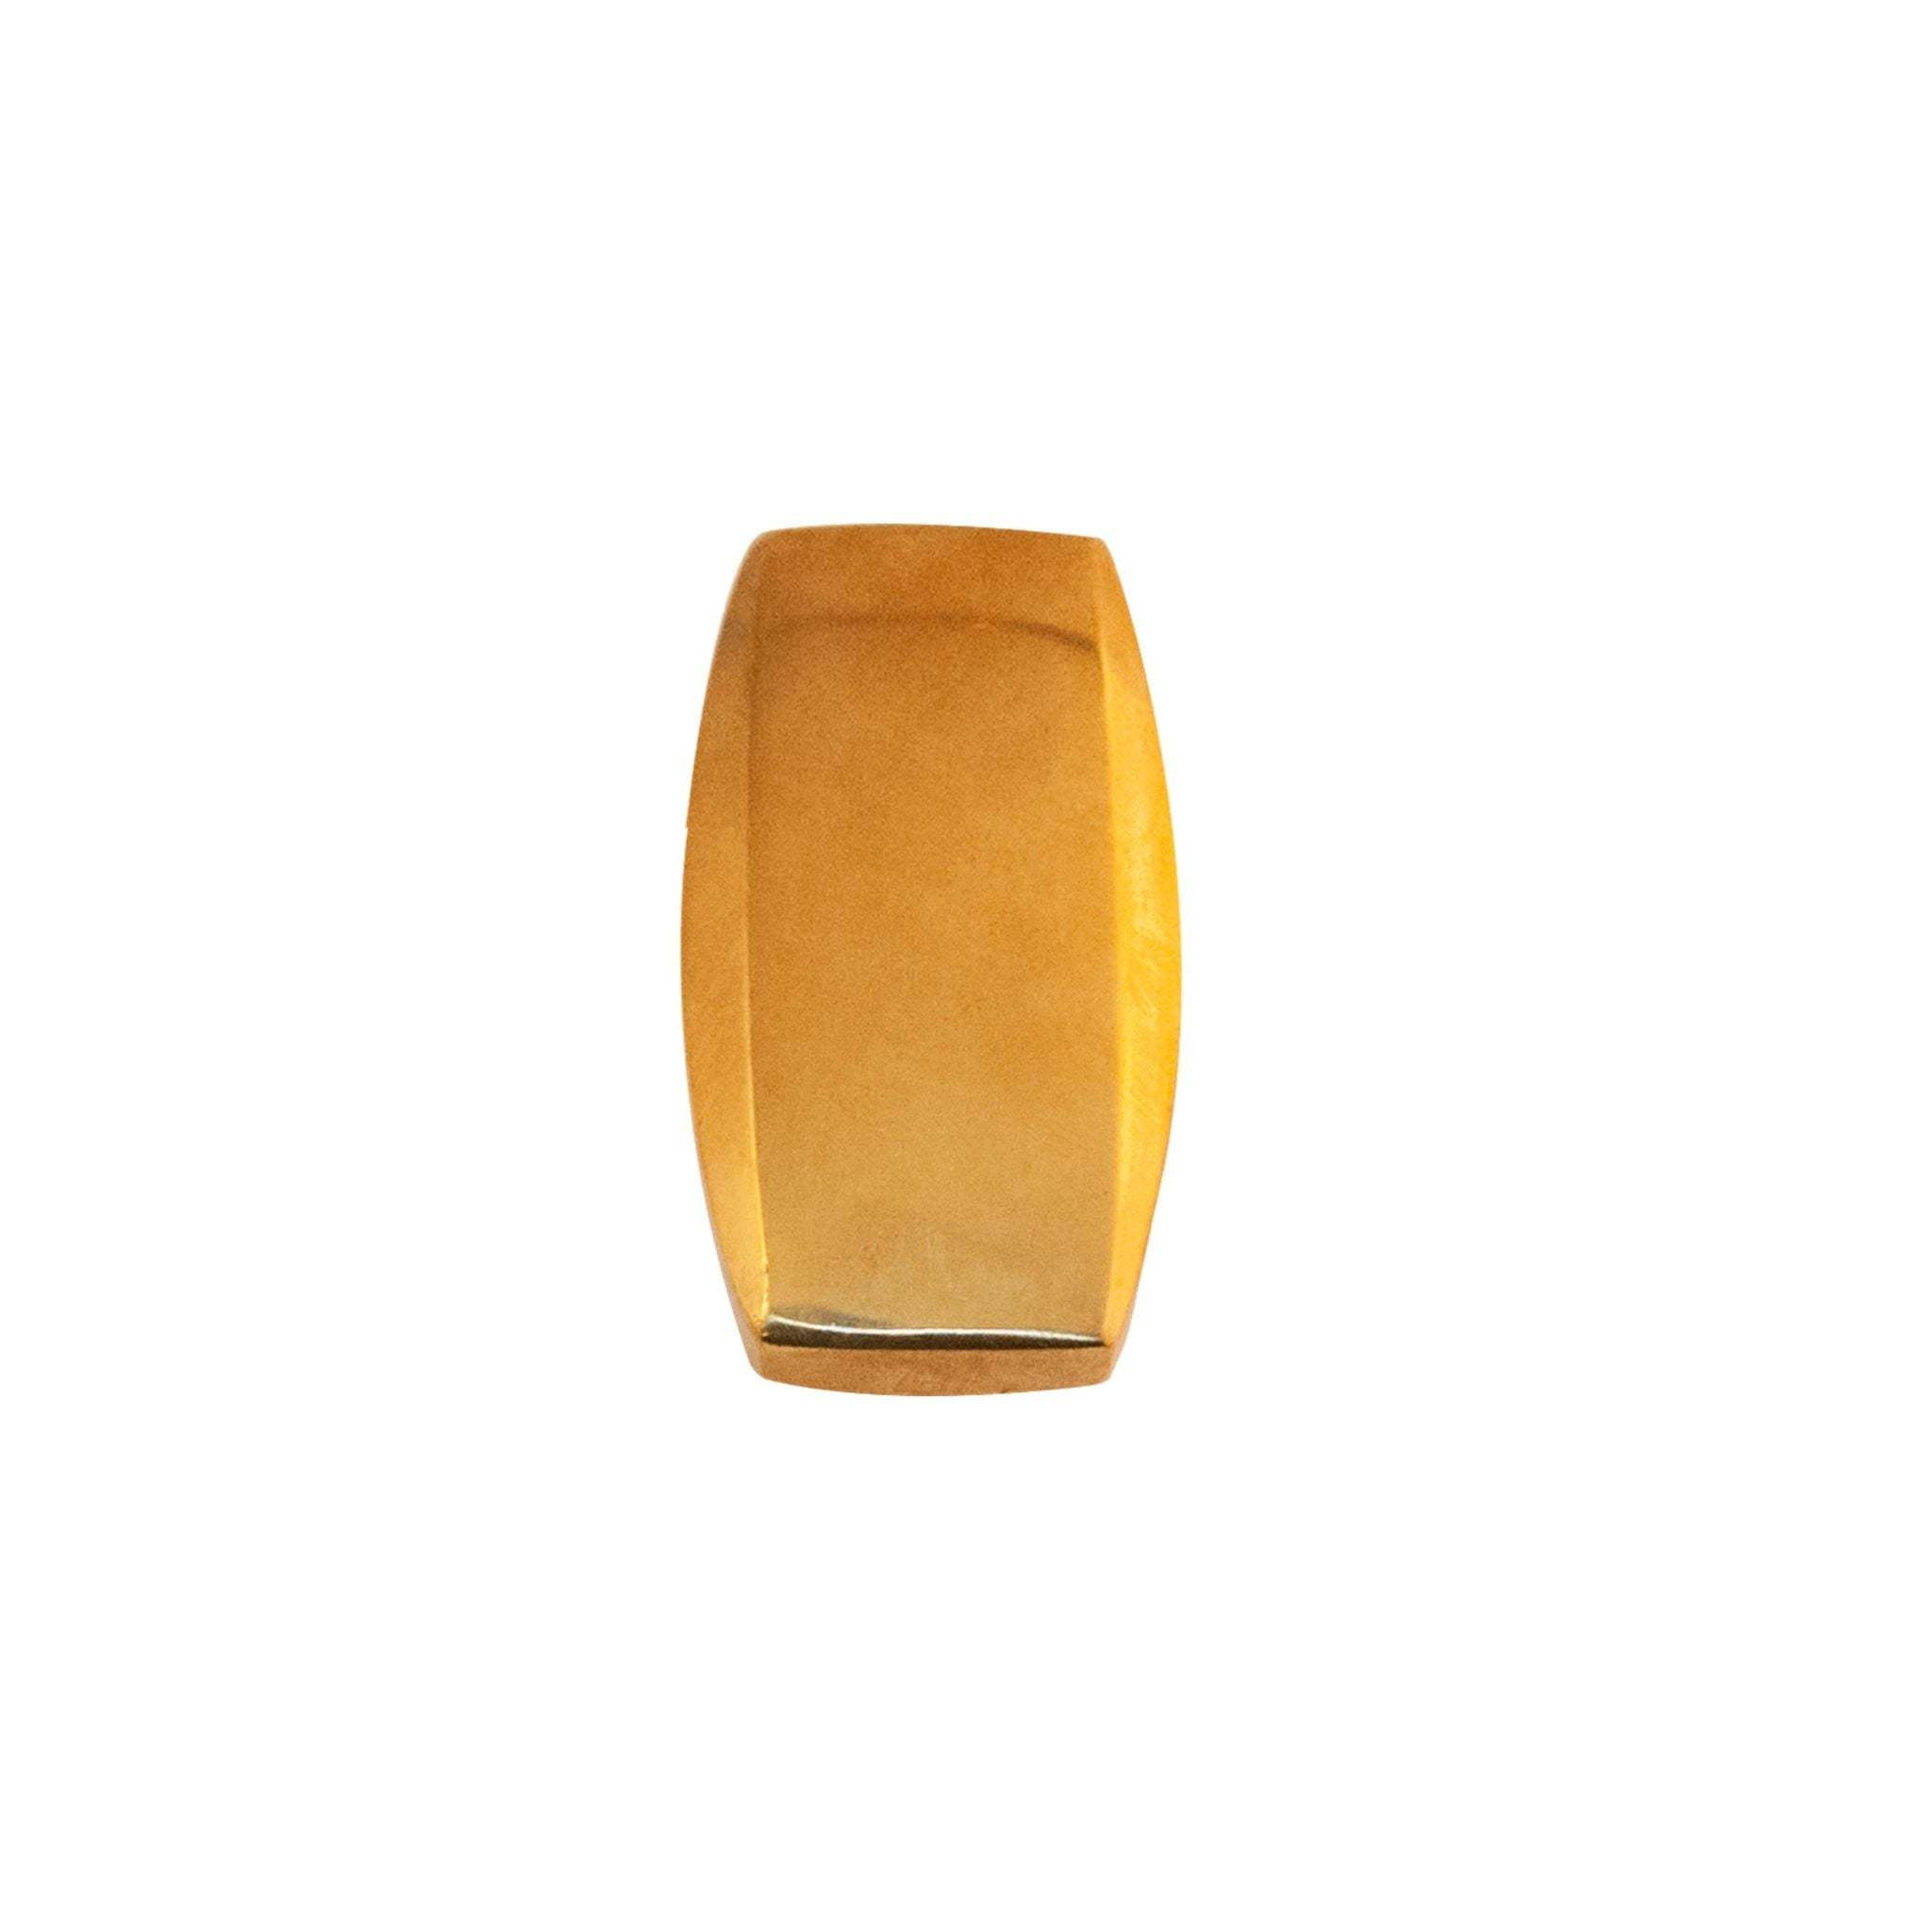 Novecento Praga Brass Knob: A simple and linear brass knob, perfect for adding timeless elegance to your décor.